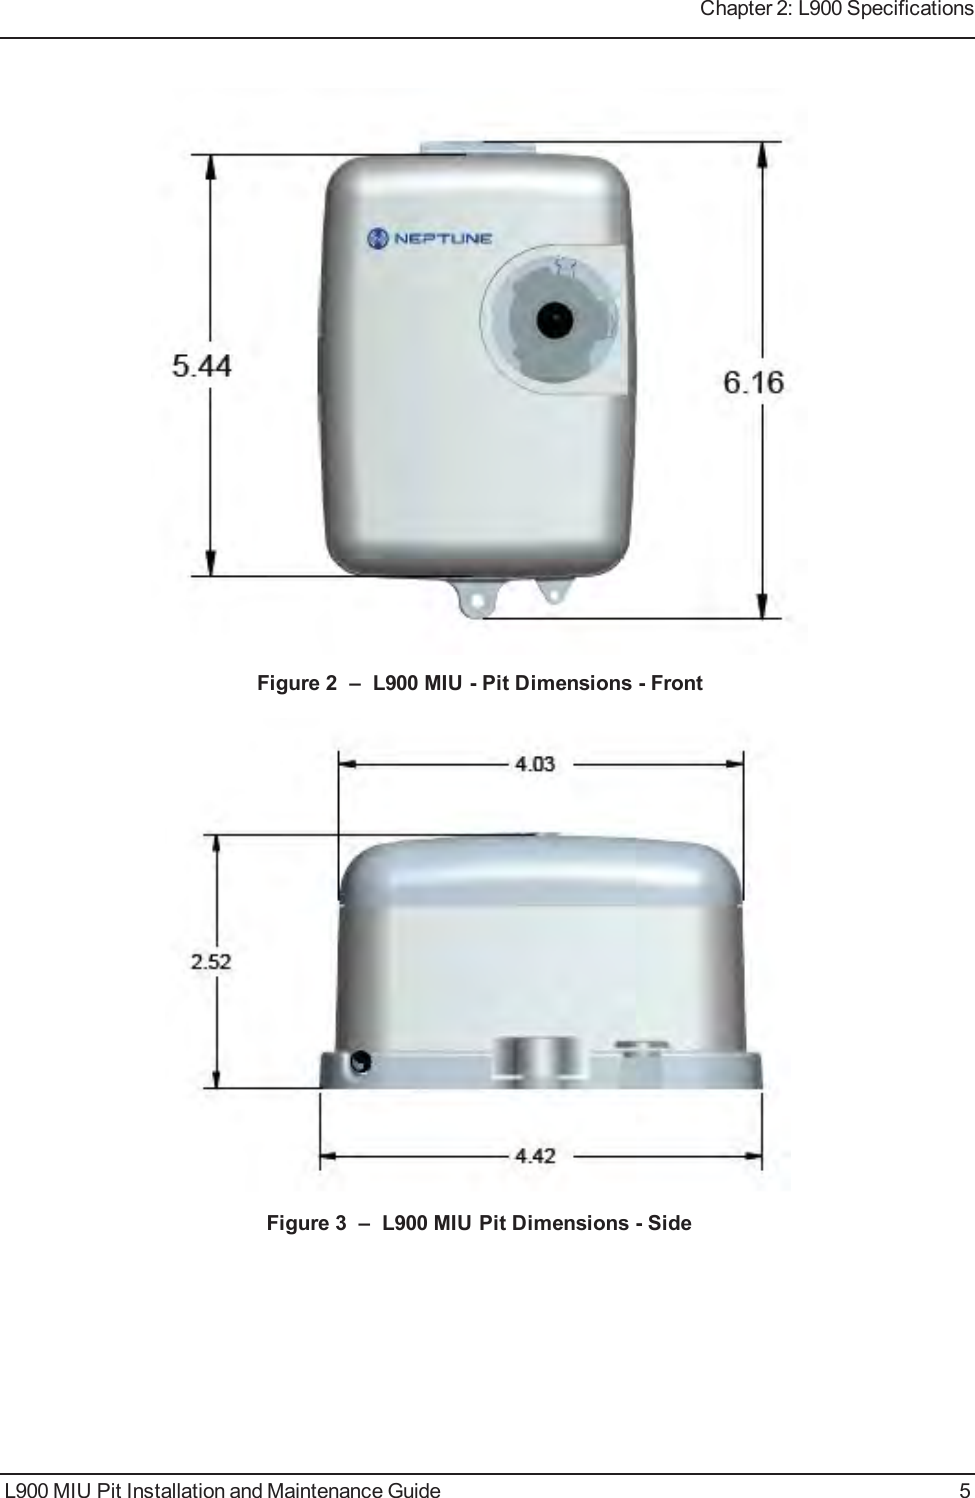 Figure 2 – L900 MIU - Pit Dimensions - FrontFigure 3 – L900 MIU Pit Dimensions - SideL900 MIU Pit Installation and Maintenance Guide 5Chapter 2: L900 Specifications